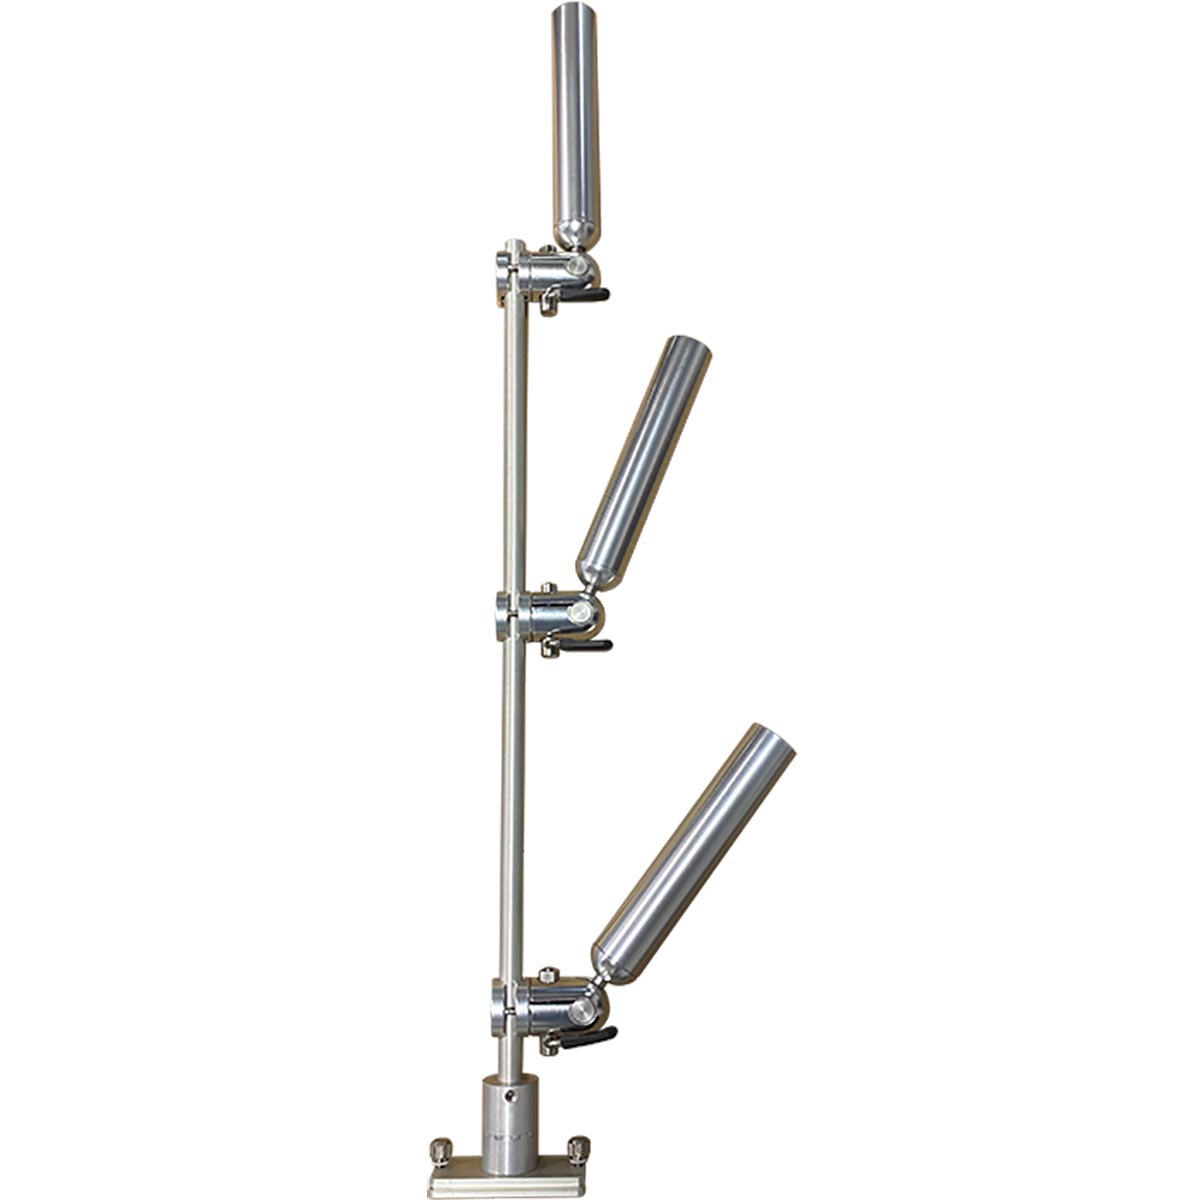 Cisco Vertical Tree Mast Triple Adjustable Rod Holder Package: On Track Mount